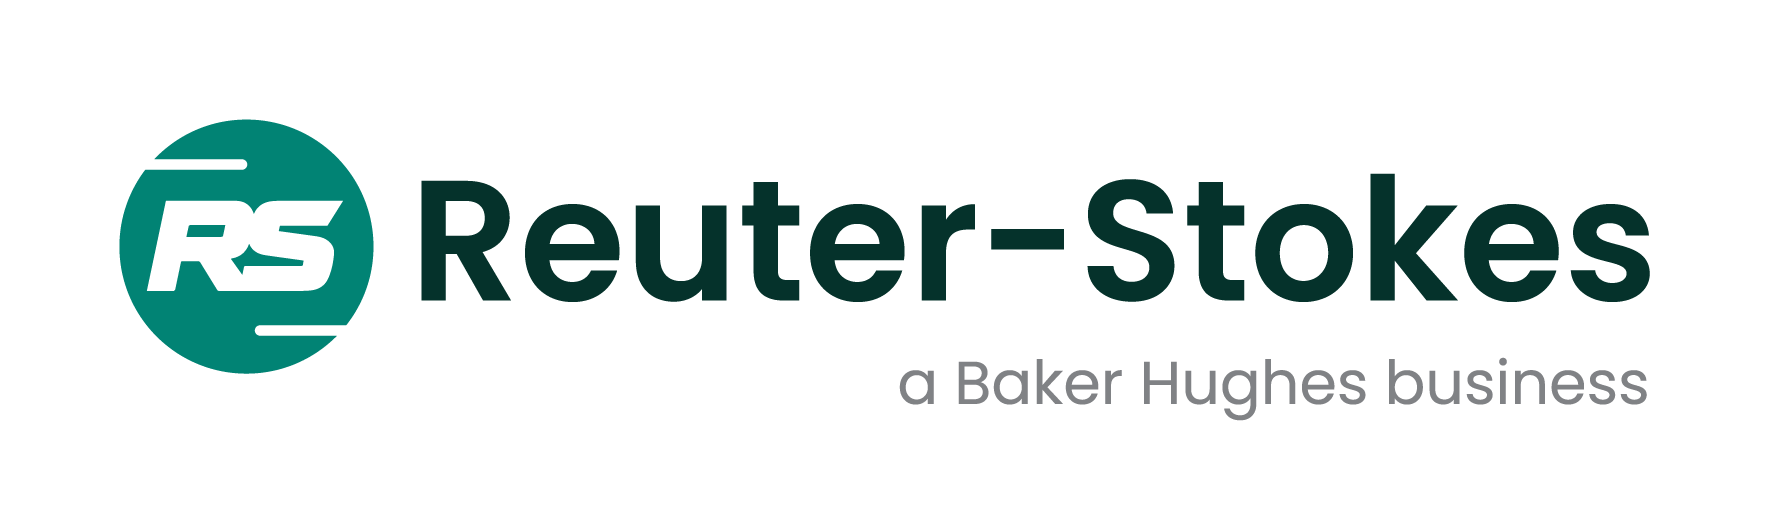 Reuter-Stokes, a Baker Hughes business Accueil